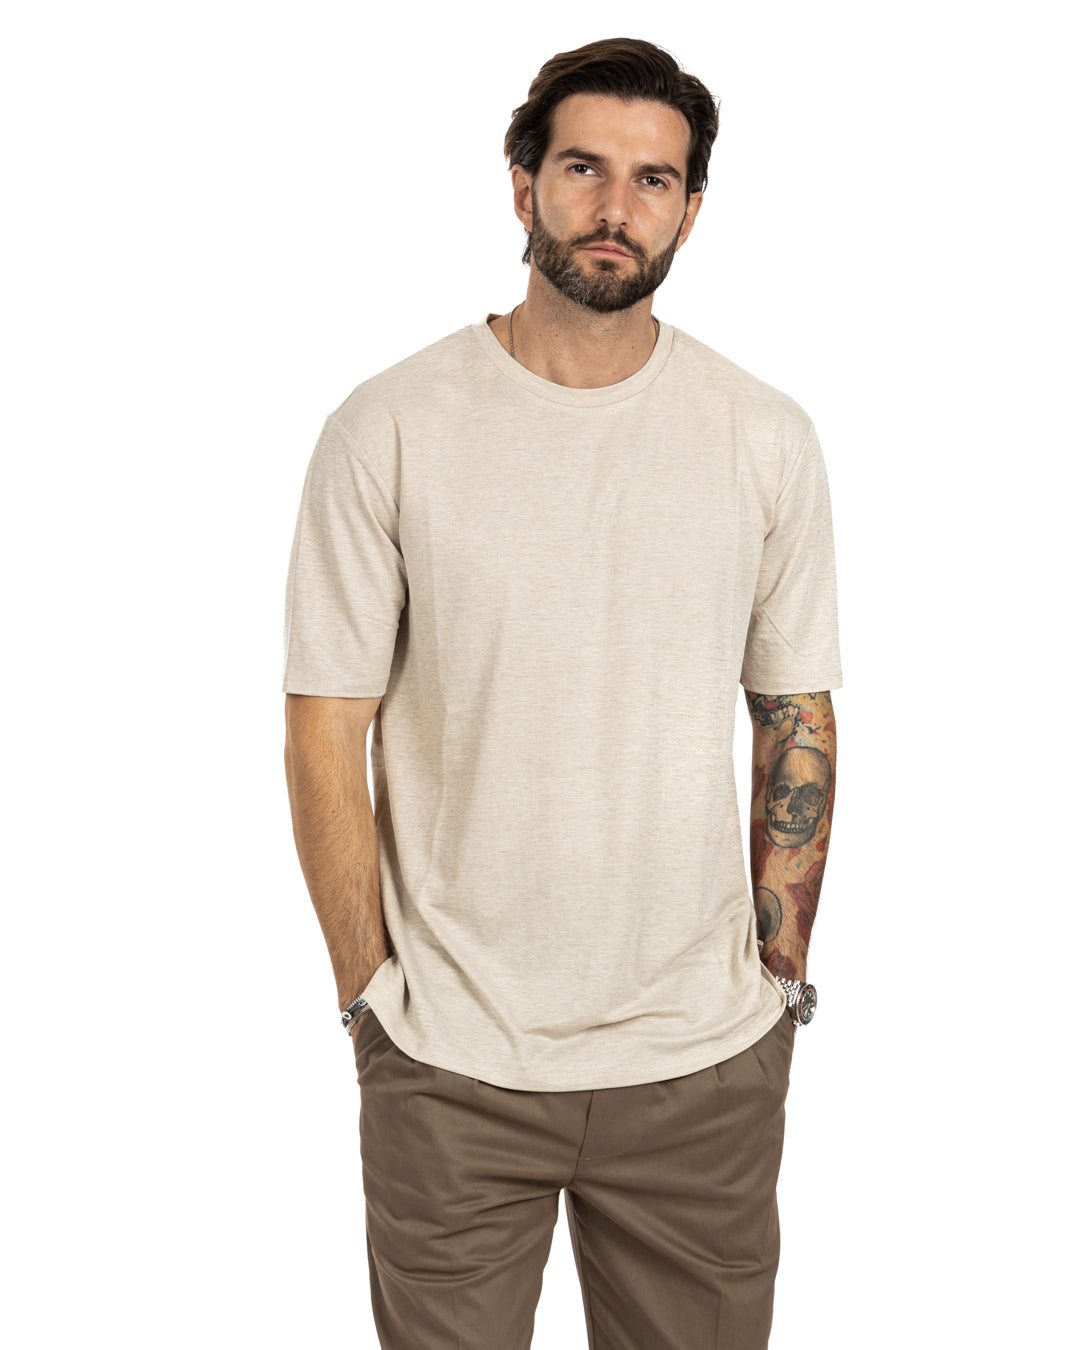 Tee - basic beige textured t-shirt